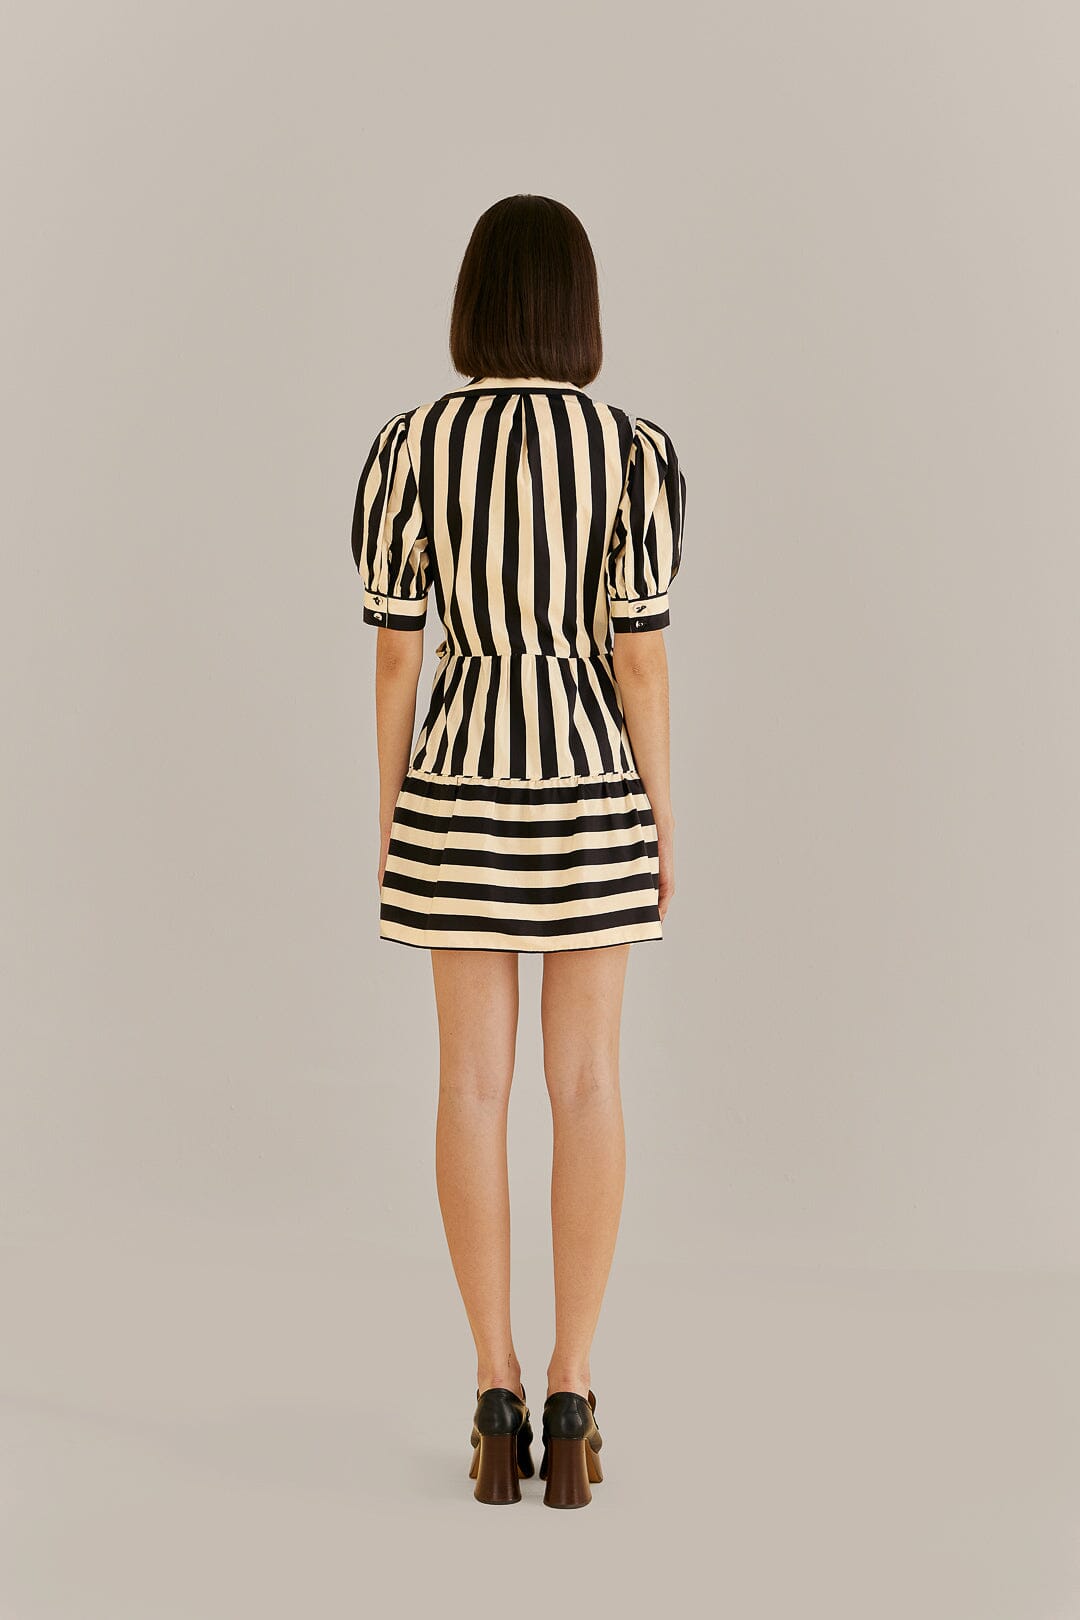 Black Mixed Stripes Short Sleeve Mini Dress